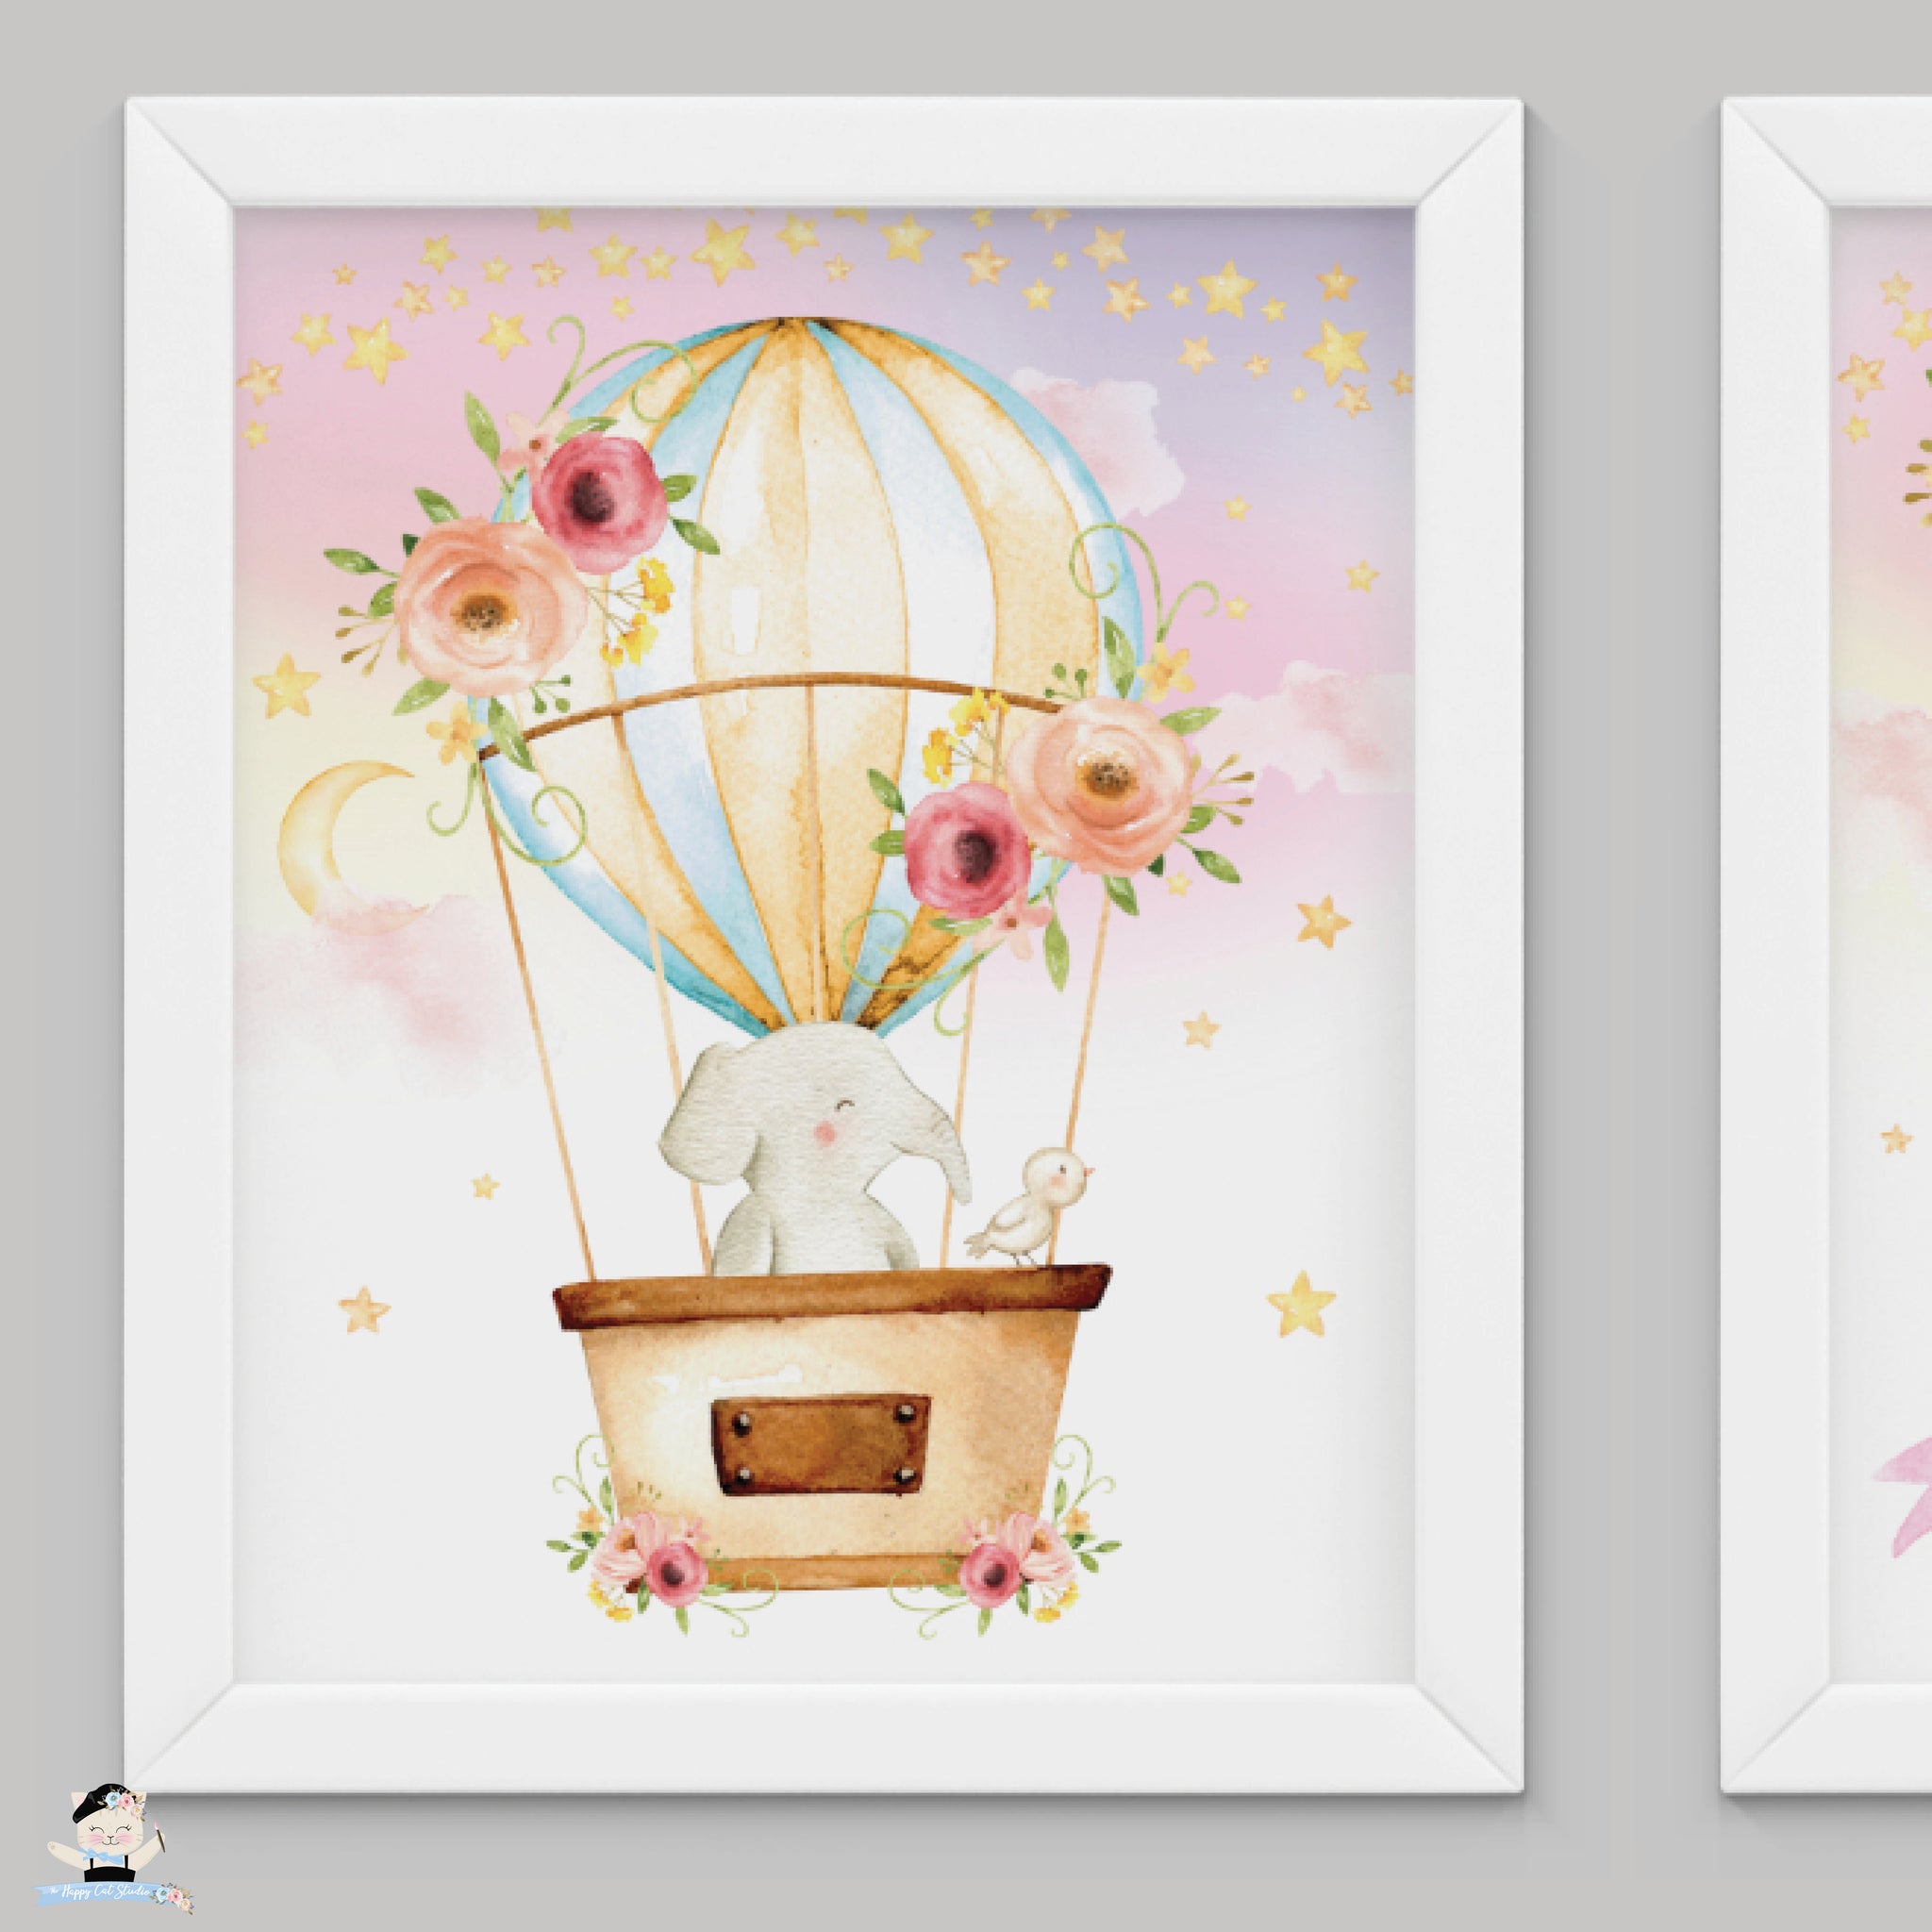 Cute Bunny Pink Flowers Nursery Wall Art - Set Of 3 - Nursery Prints